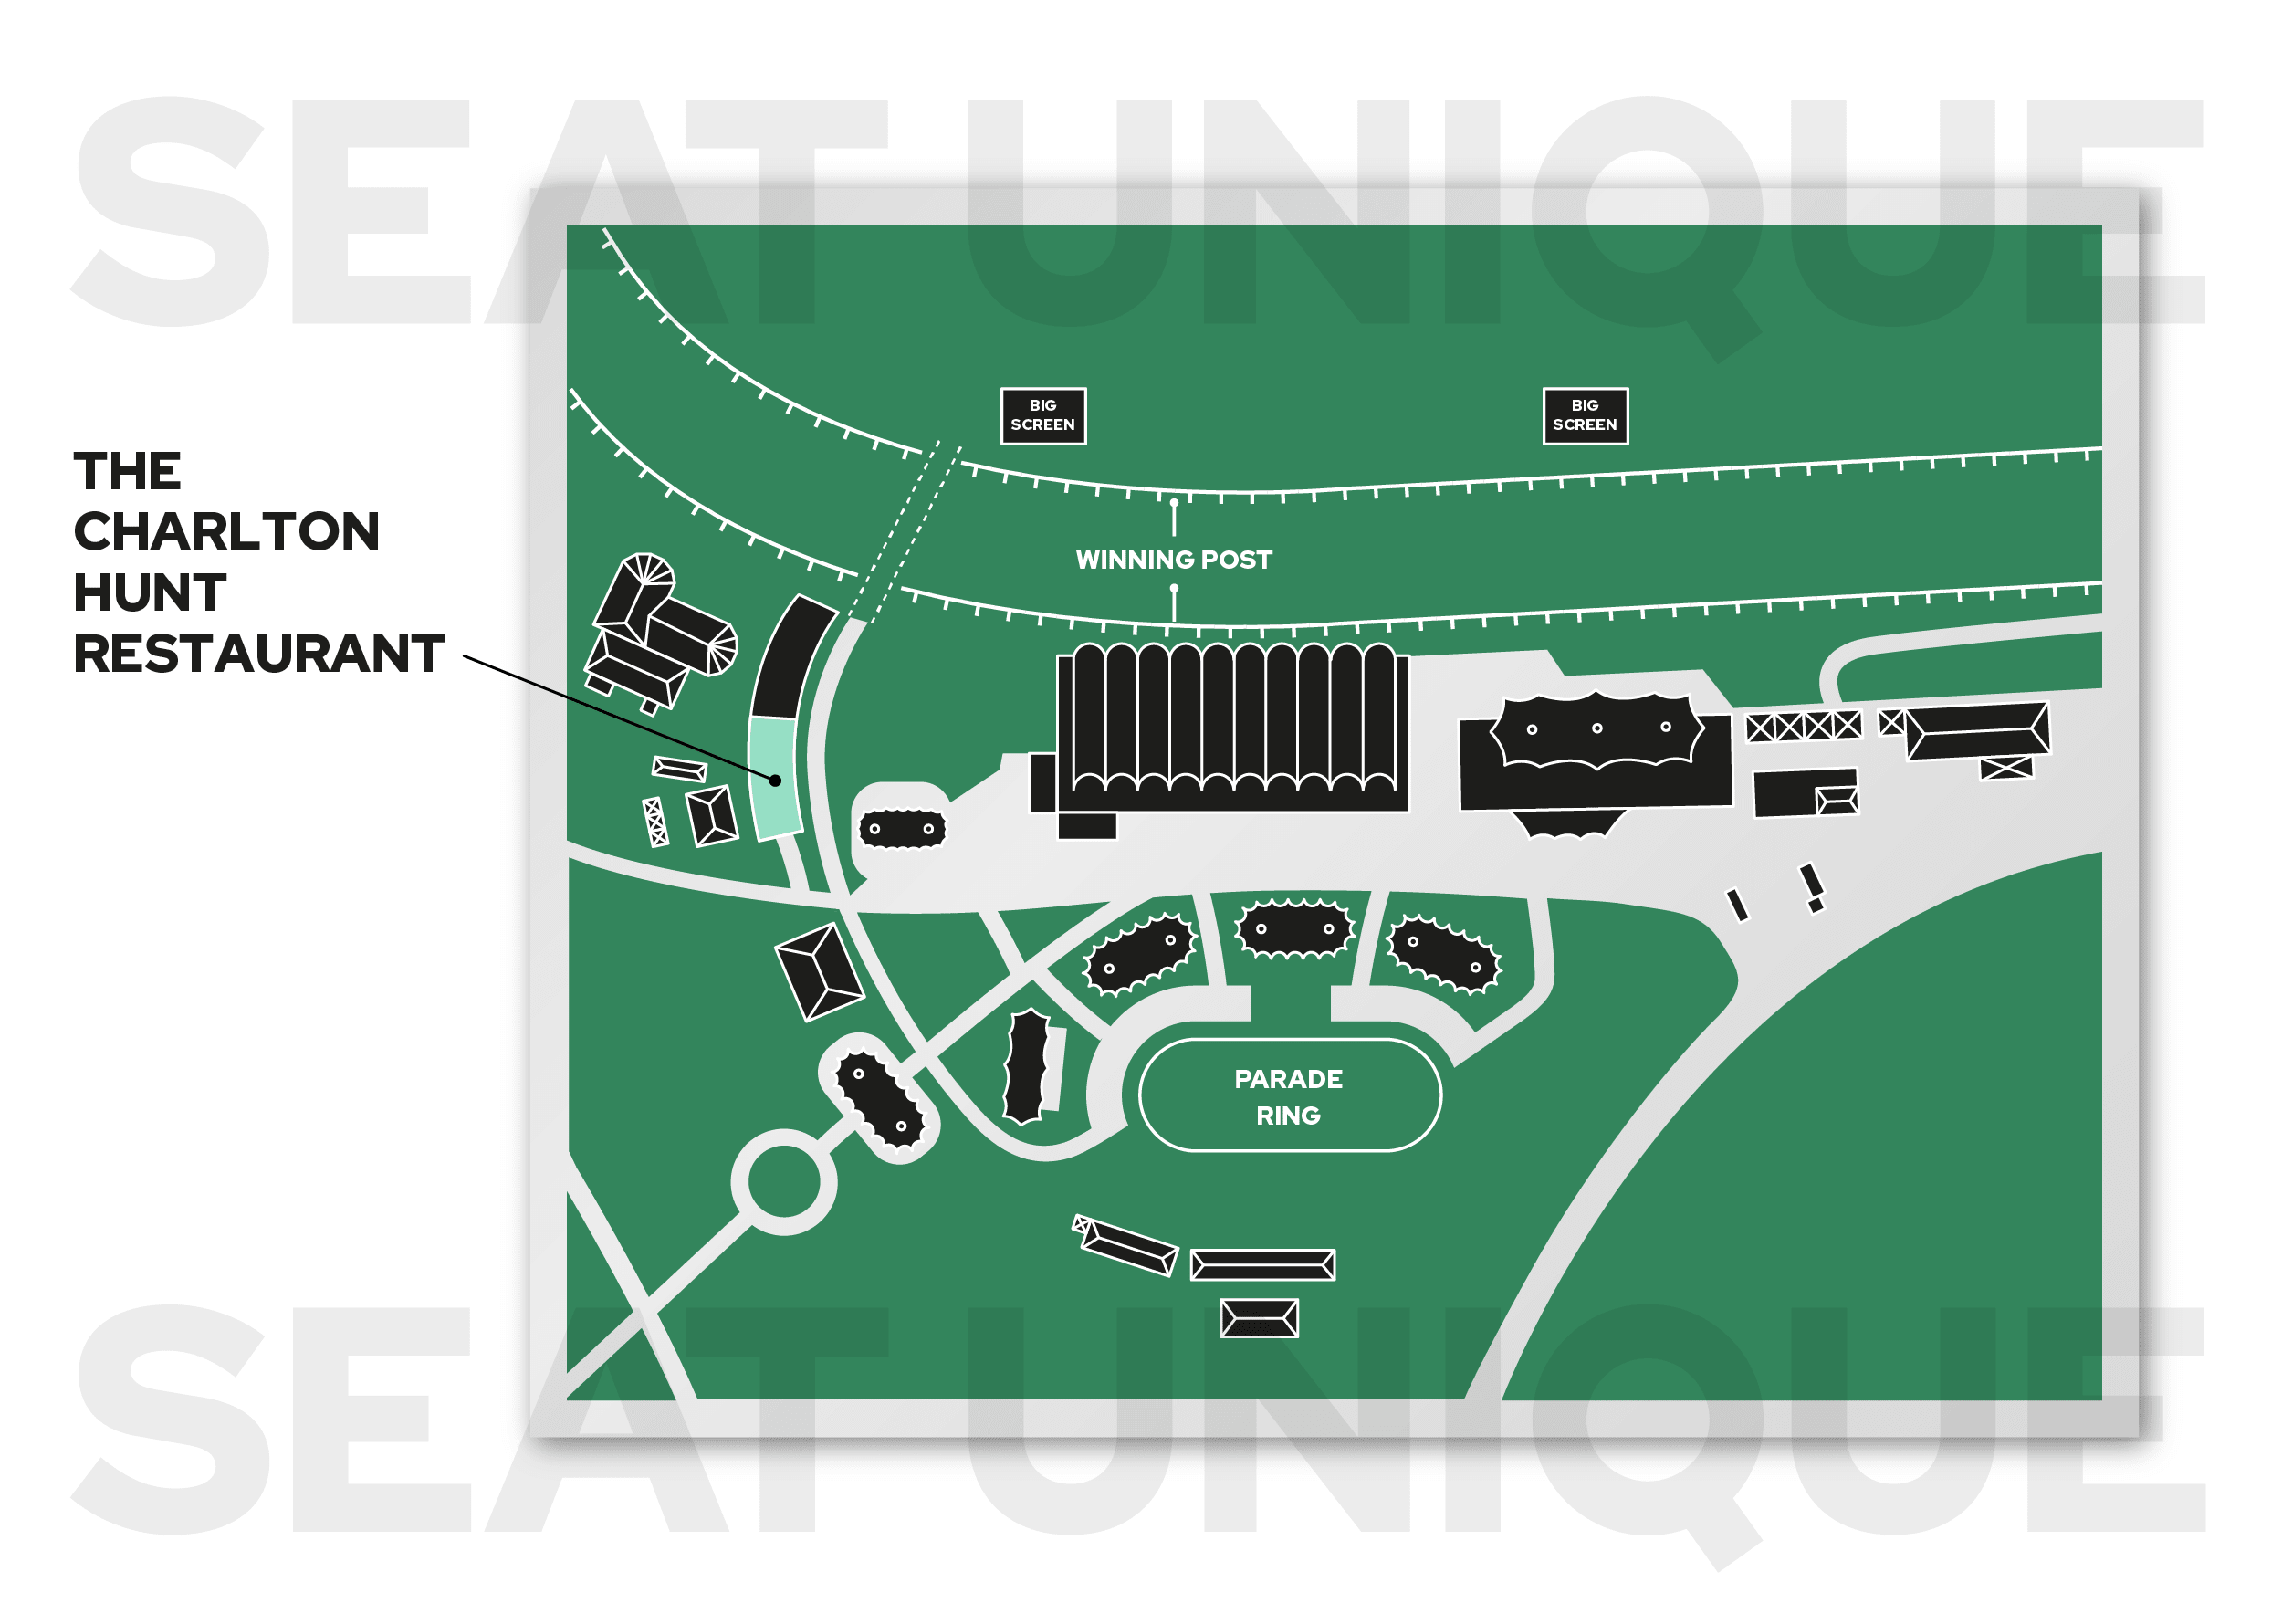 The location of The Charlton Hunt Restaurant on the Qatar Goodwood Festival map